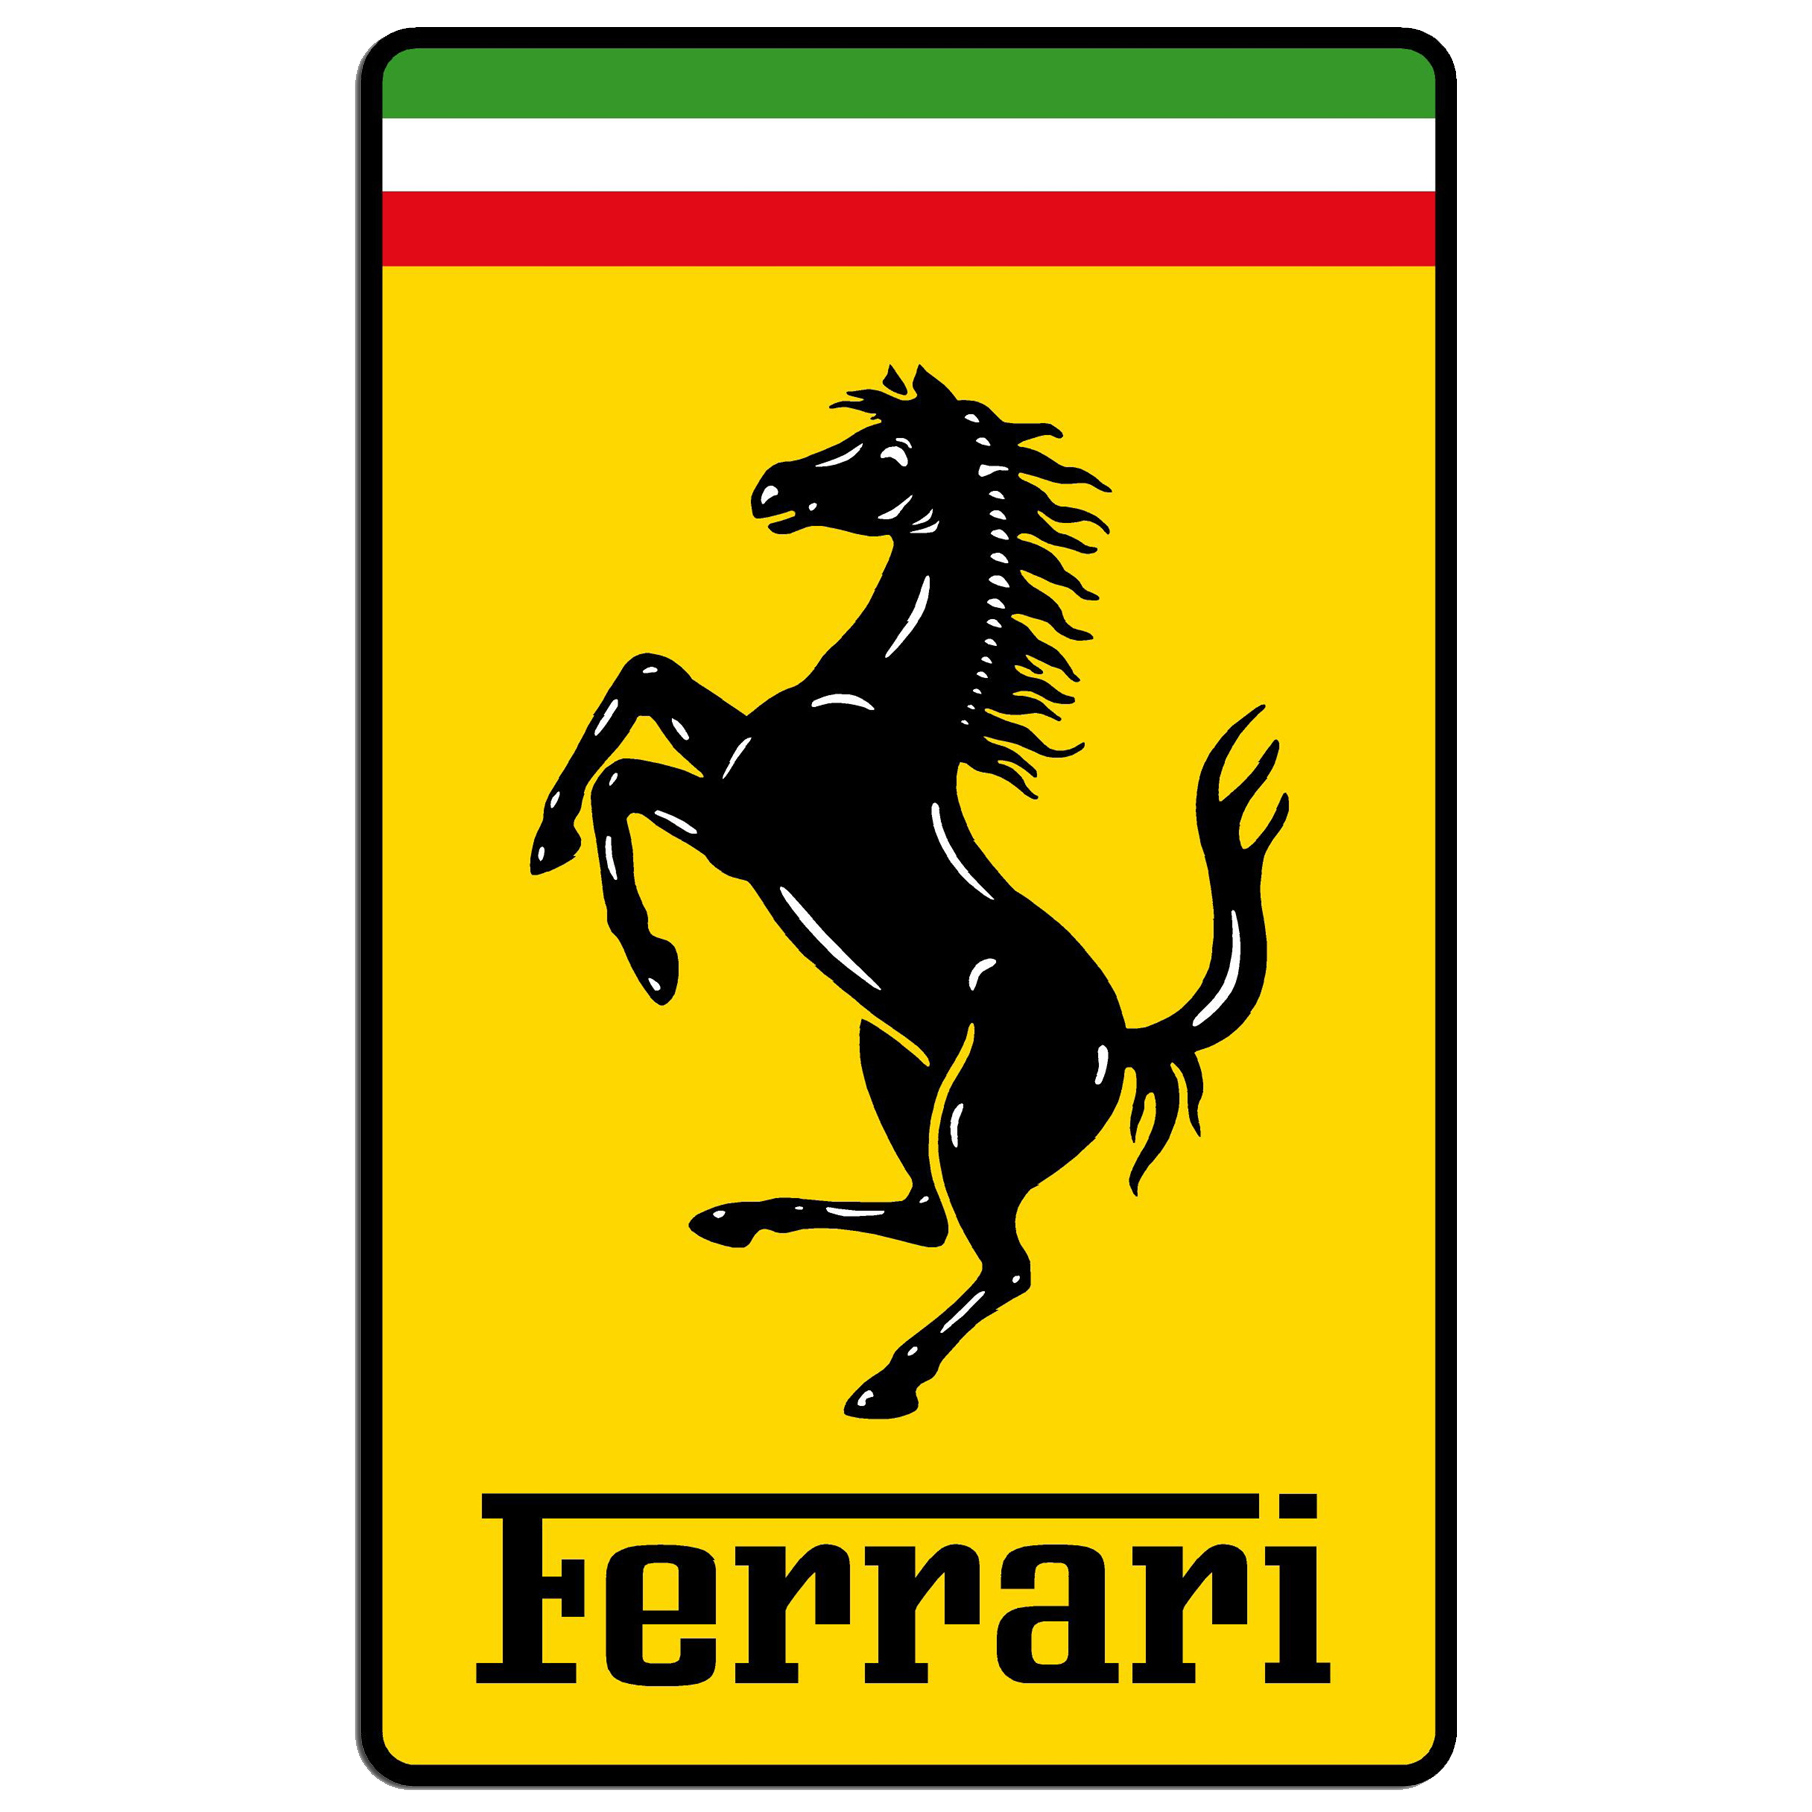 Ferrari 365 (1967 - 1976) for sale